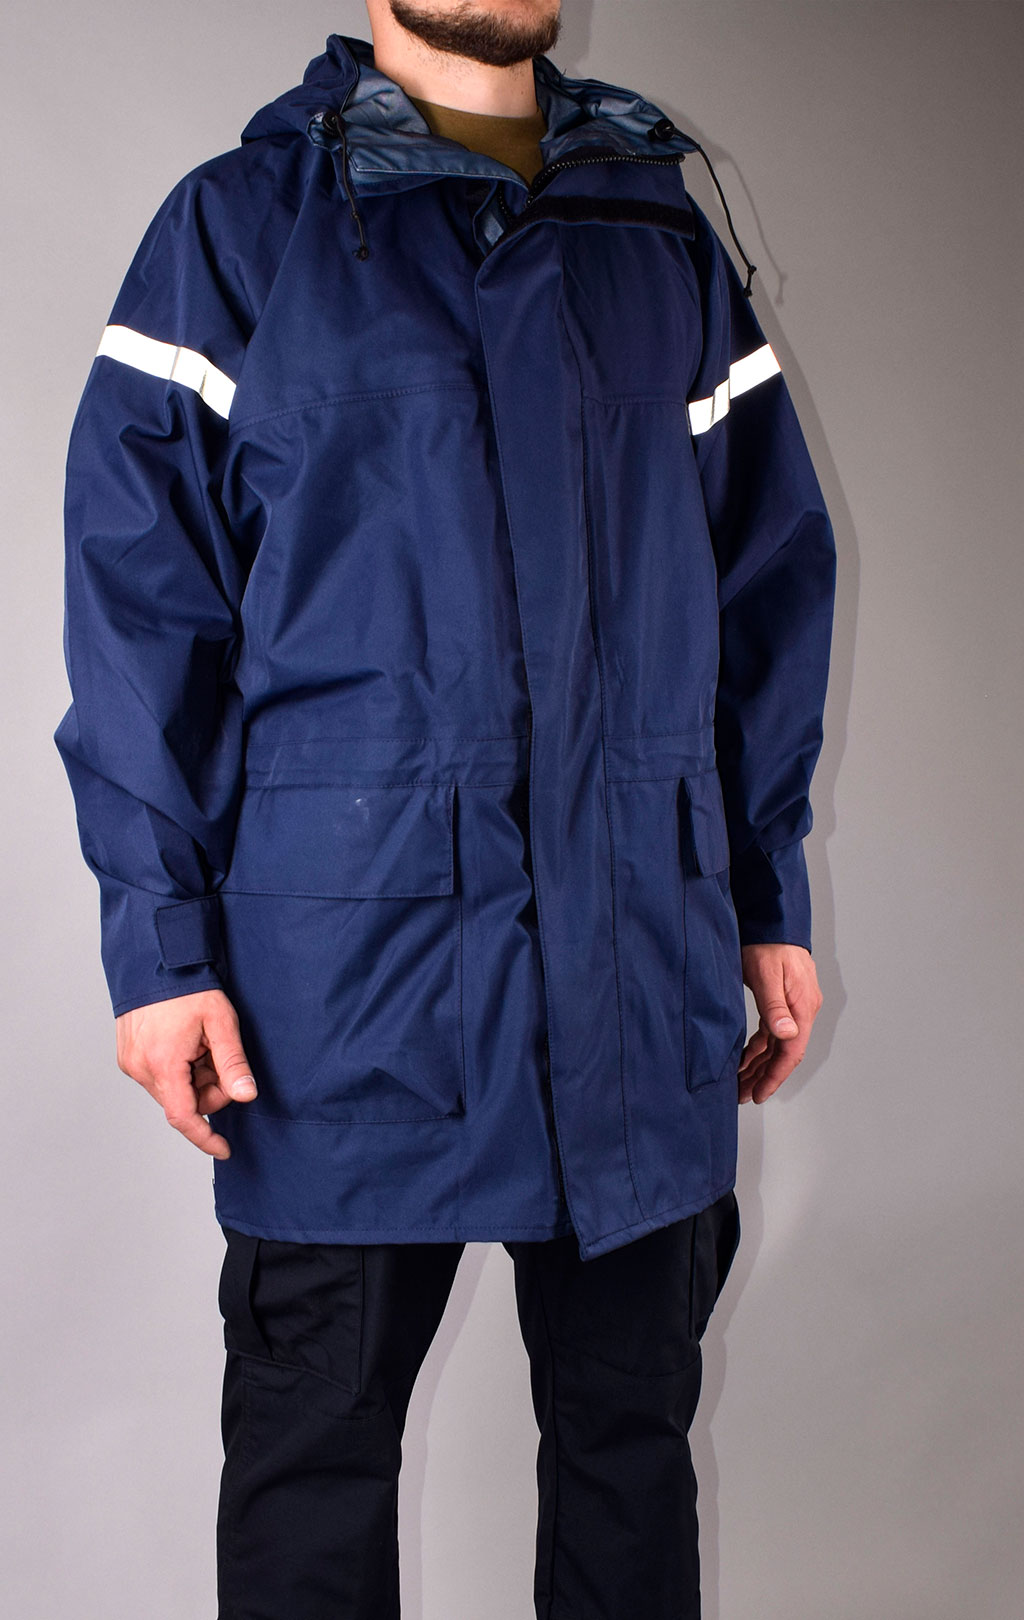 Куртка непромокаемая Gore-Tex RAF Gore-Tex navy б/у Англия